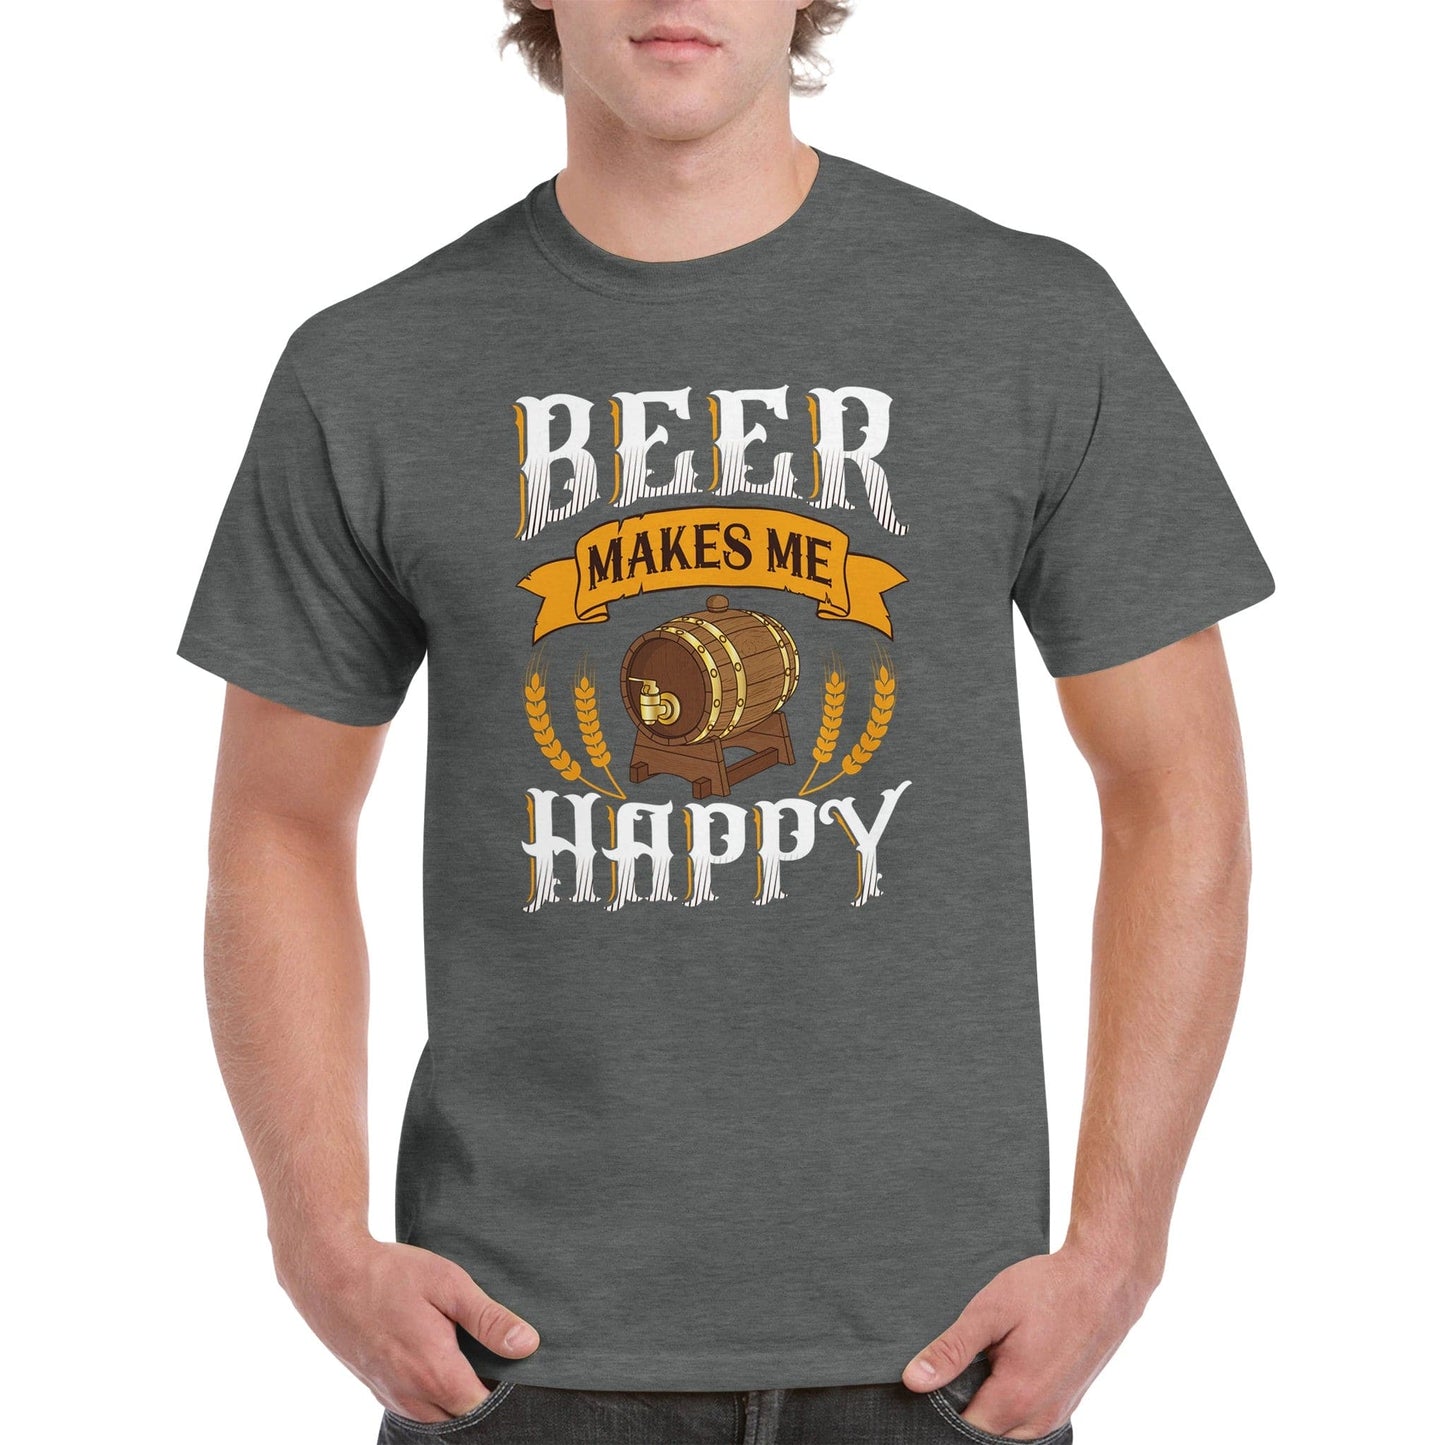 "Bear makes me happy" T-shirt